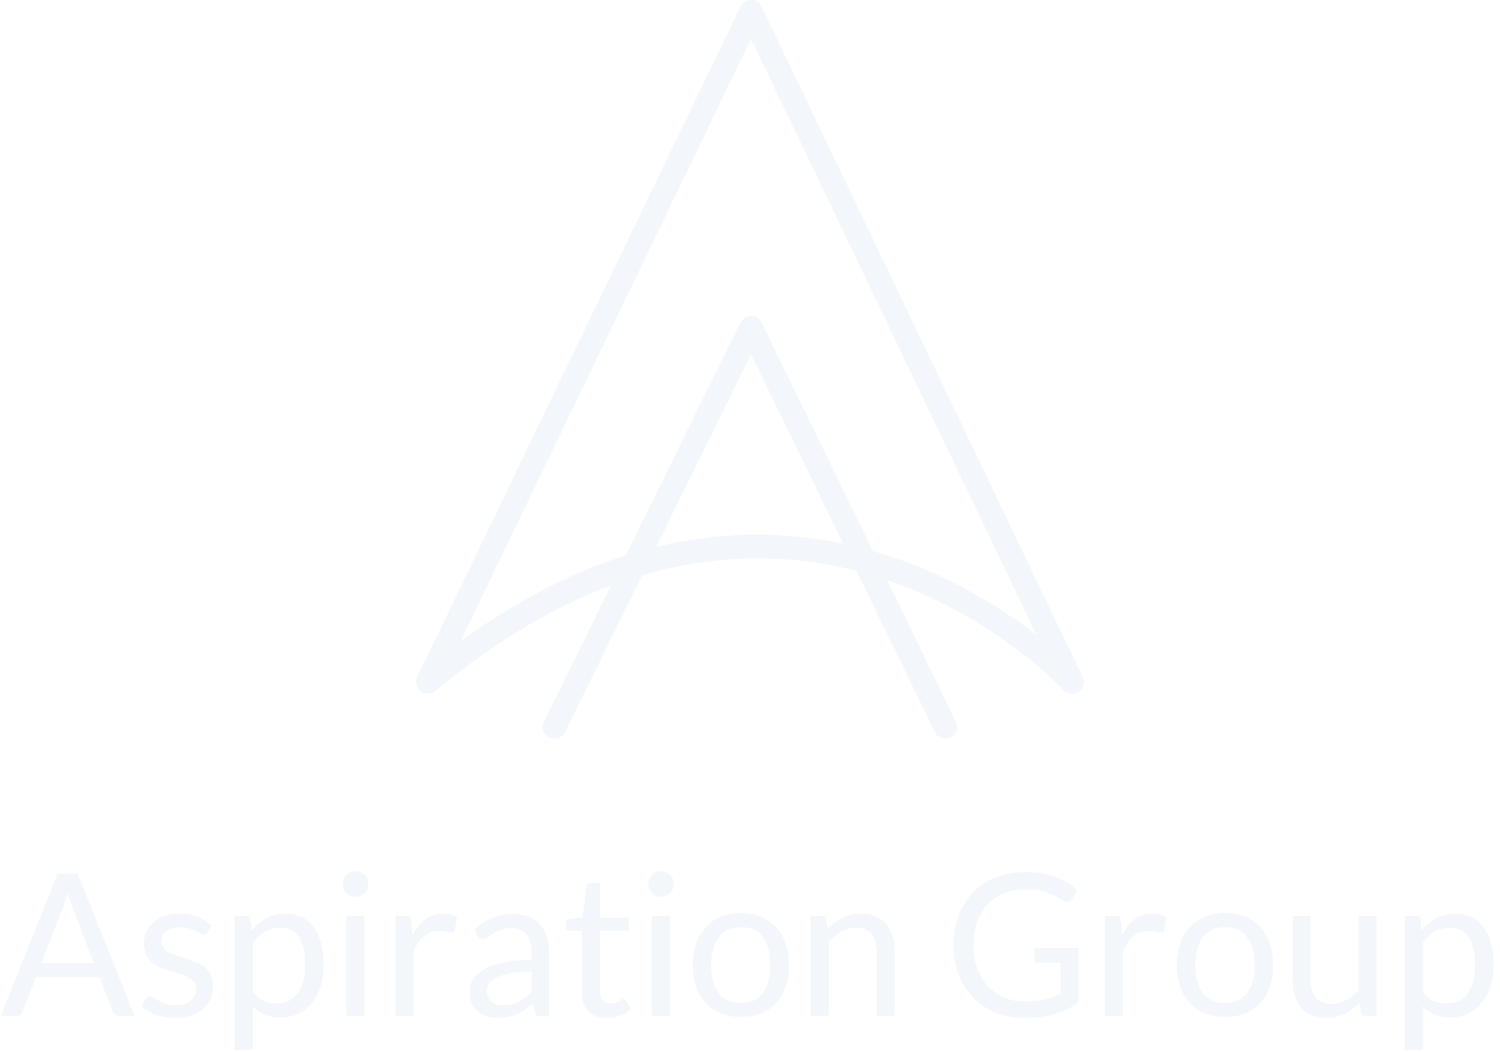 The Aspiration Group